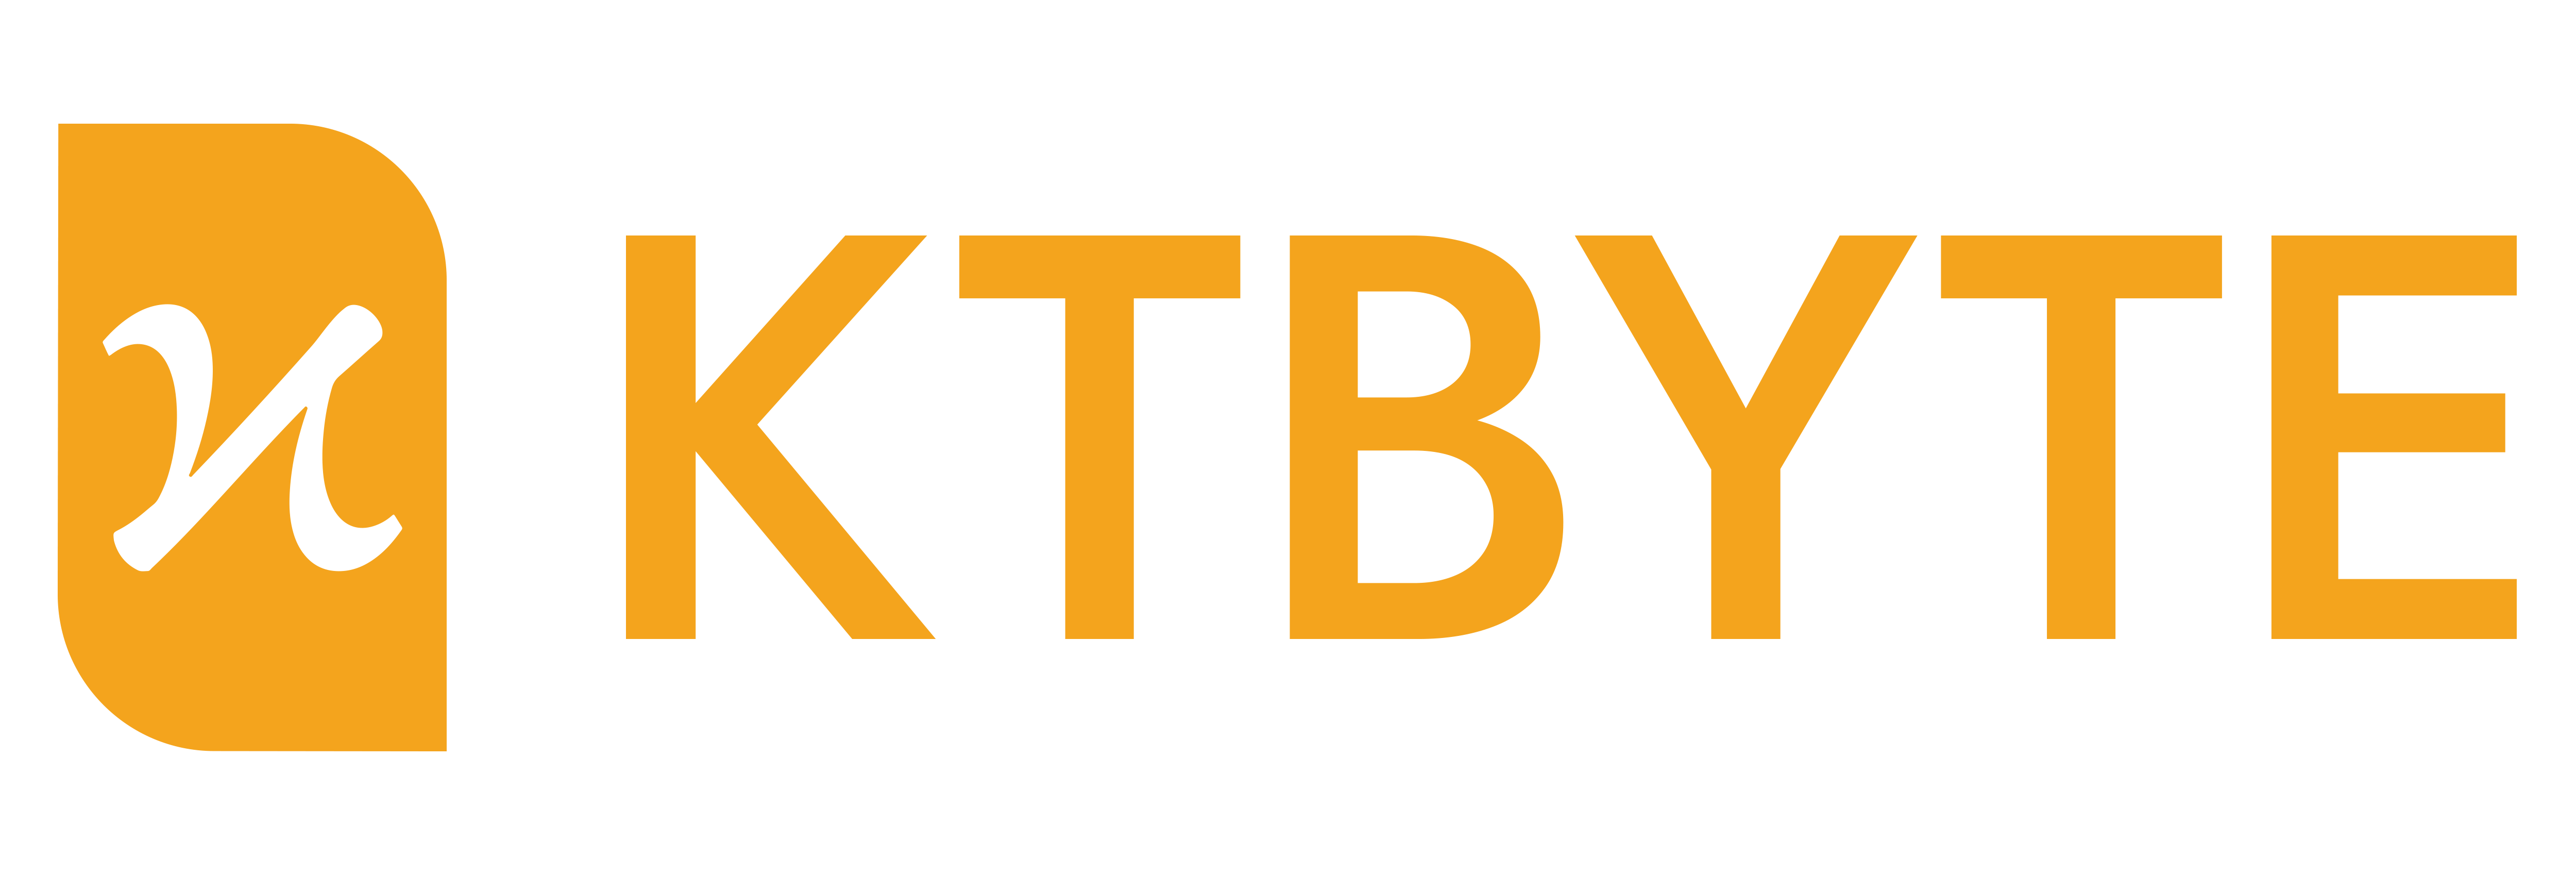 KTBYTE Computer Science Academy Logo